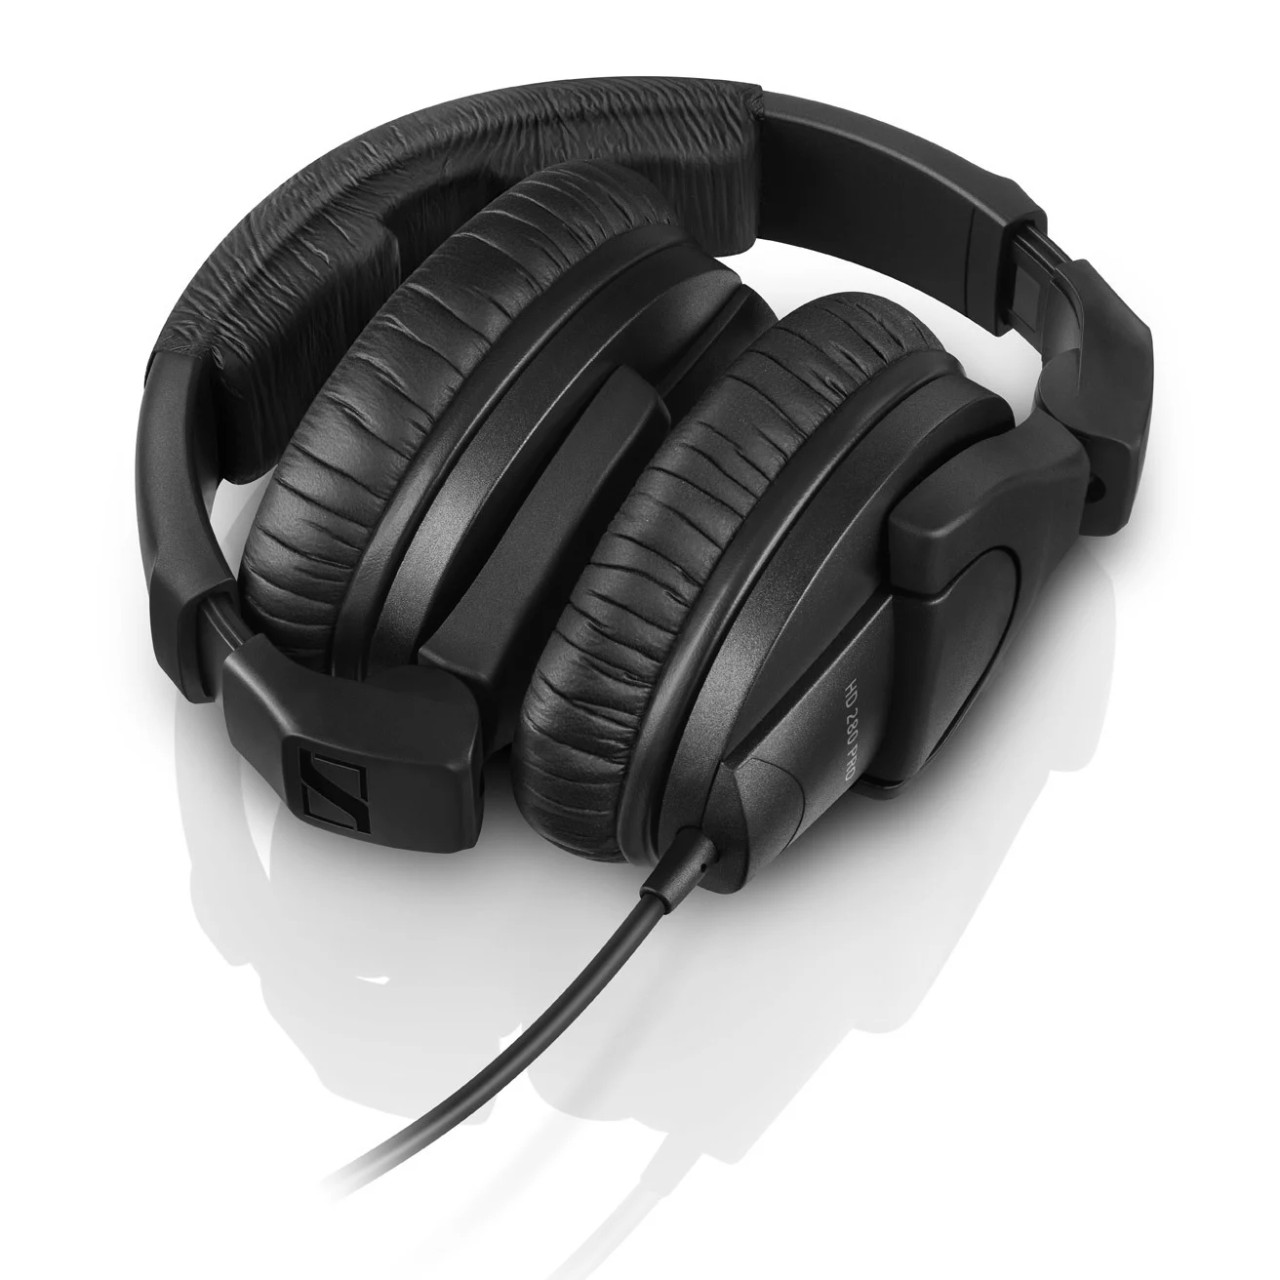 Sennheiser Closed, Around-the-Ear Headphones HD 280 PRO